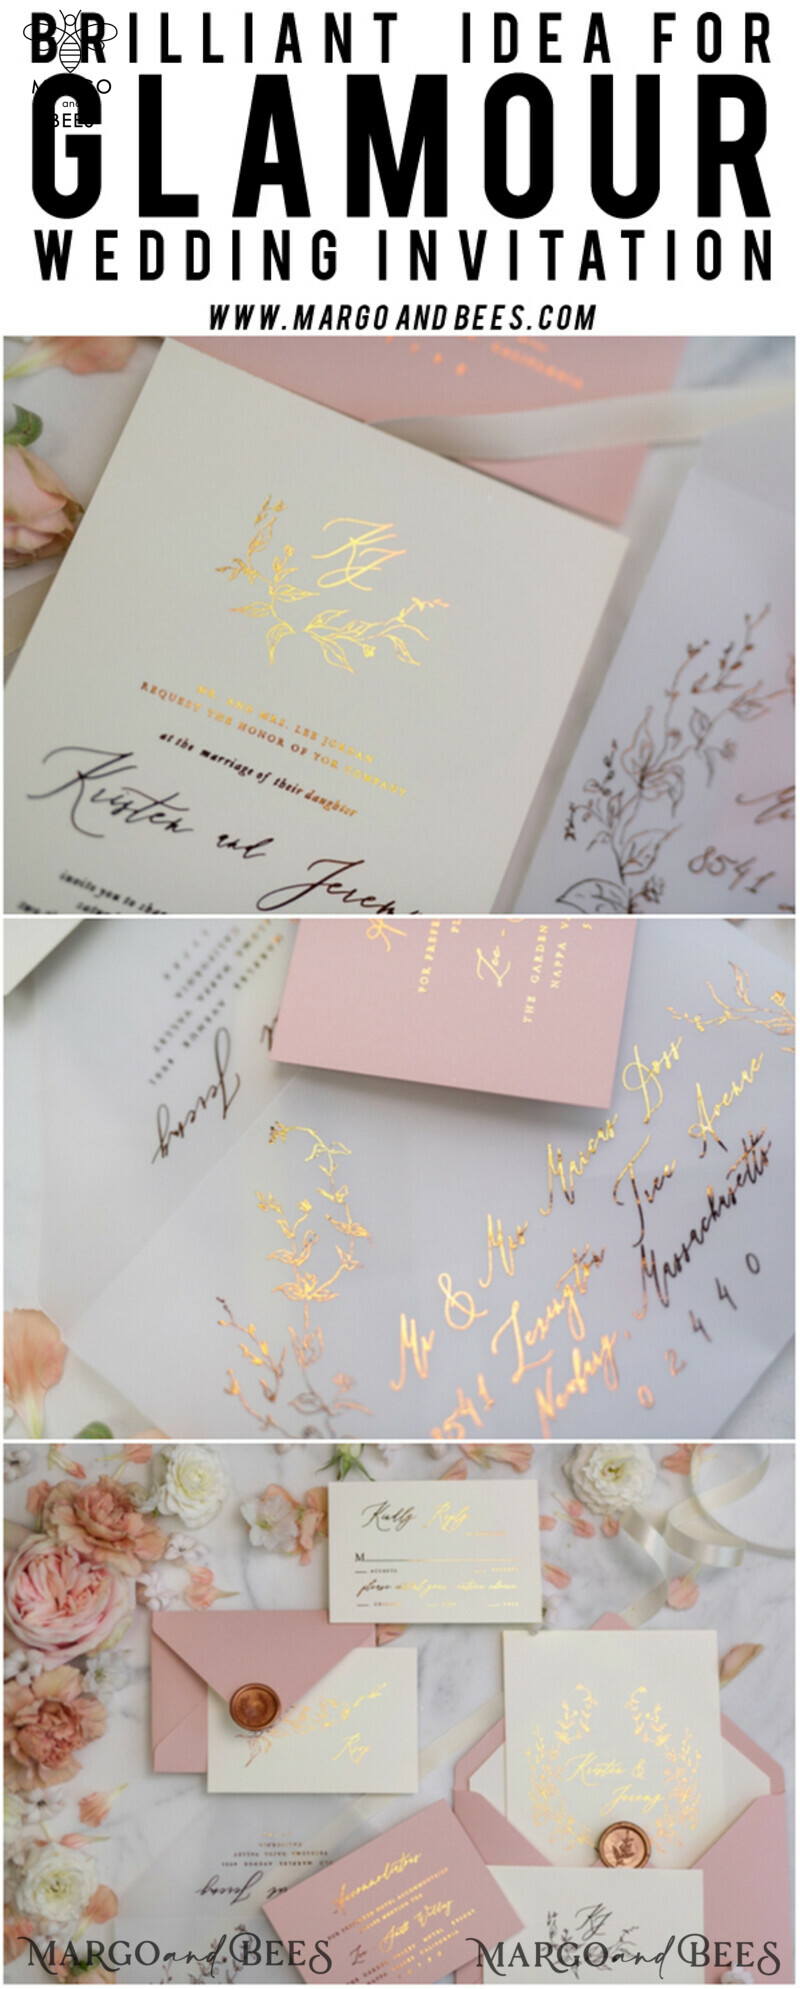 Bespoke Vellum Wedding Invitation Suite: Romantic Blush Pink and Glamour Gold Foil for Elegant Golden Wedding Invites-39